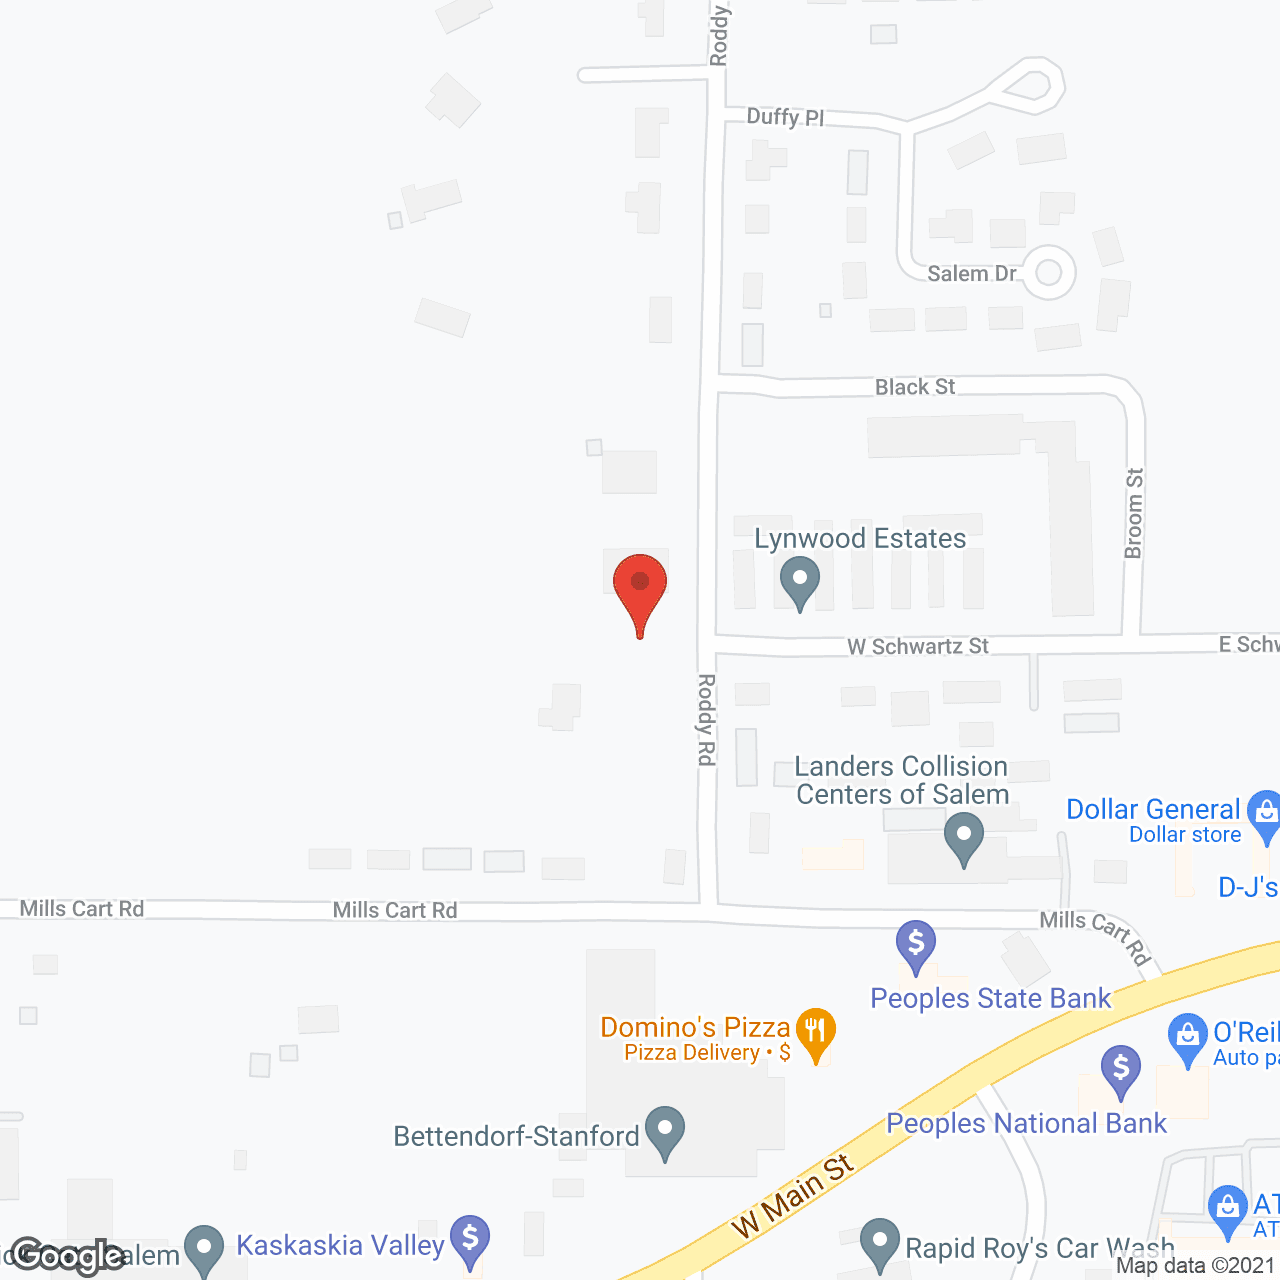 Lynwood Estates in google map